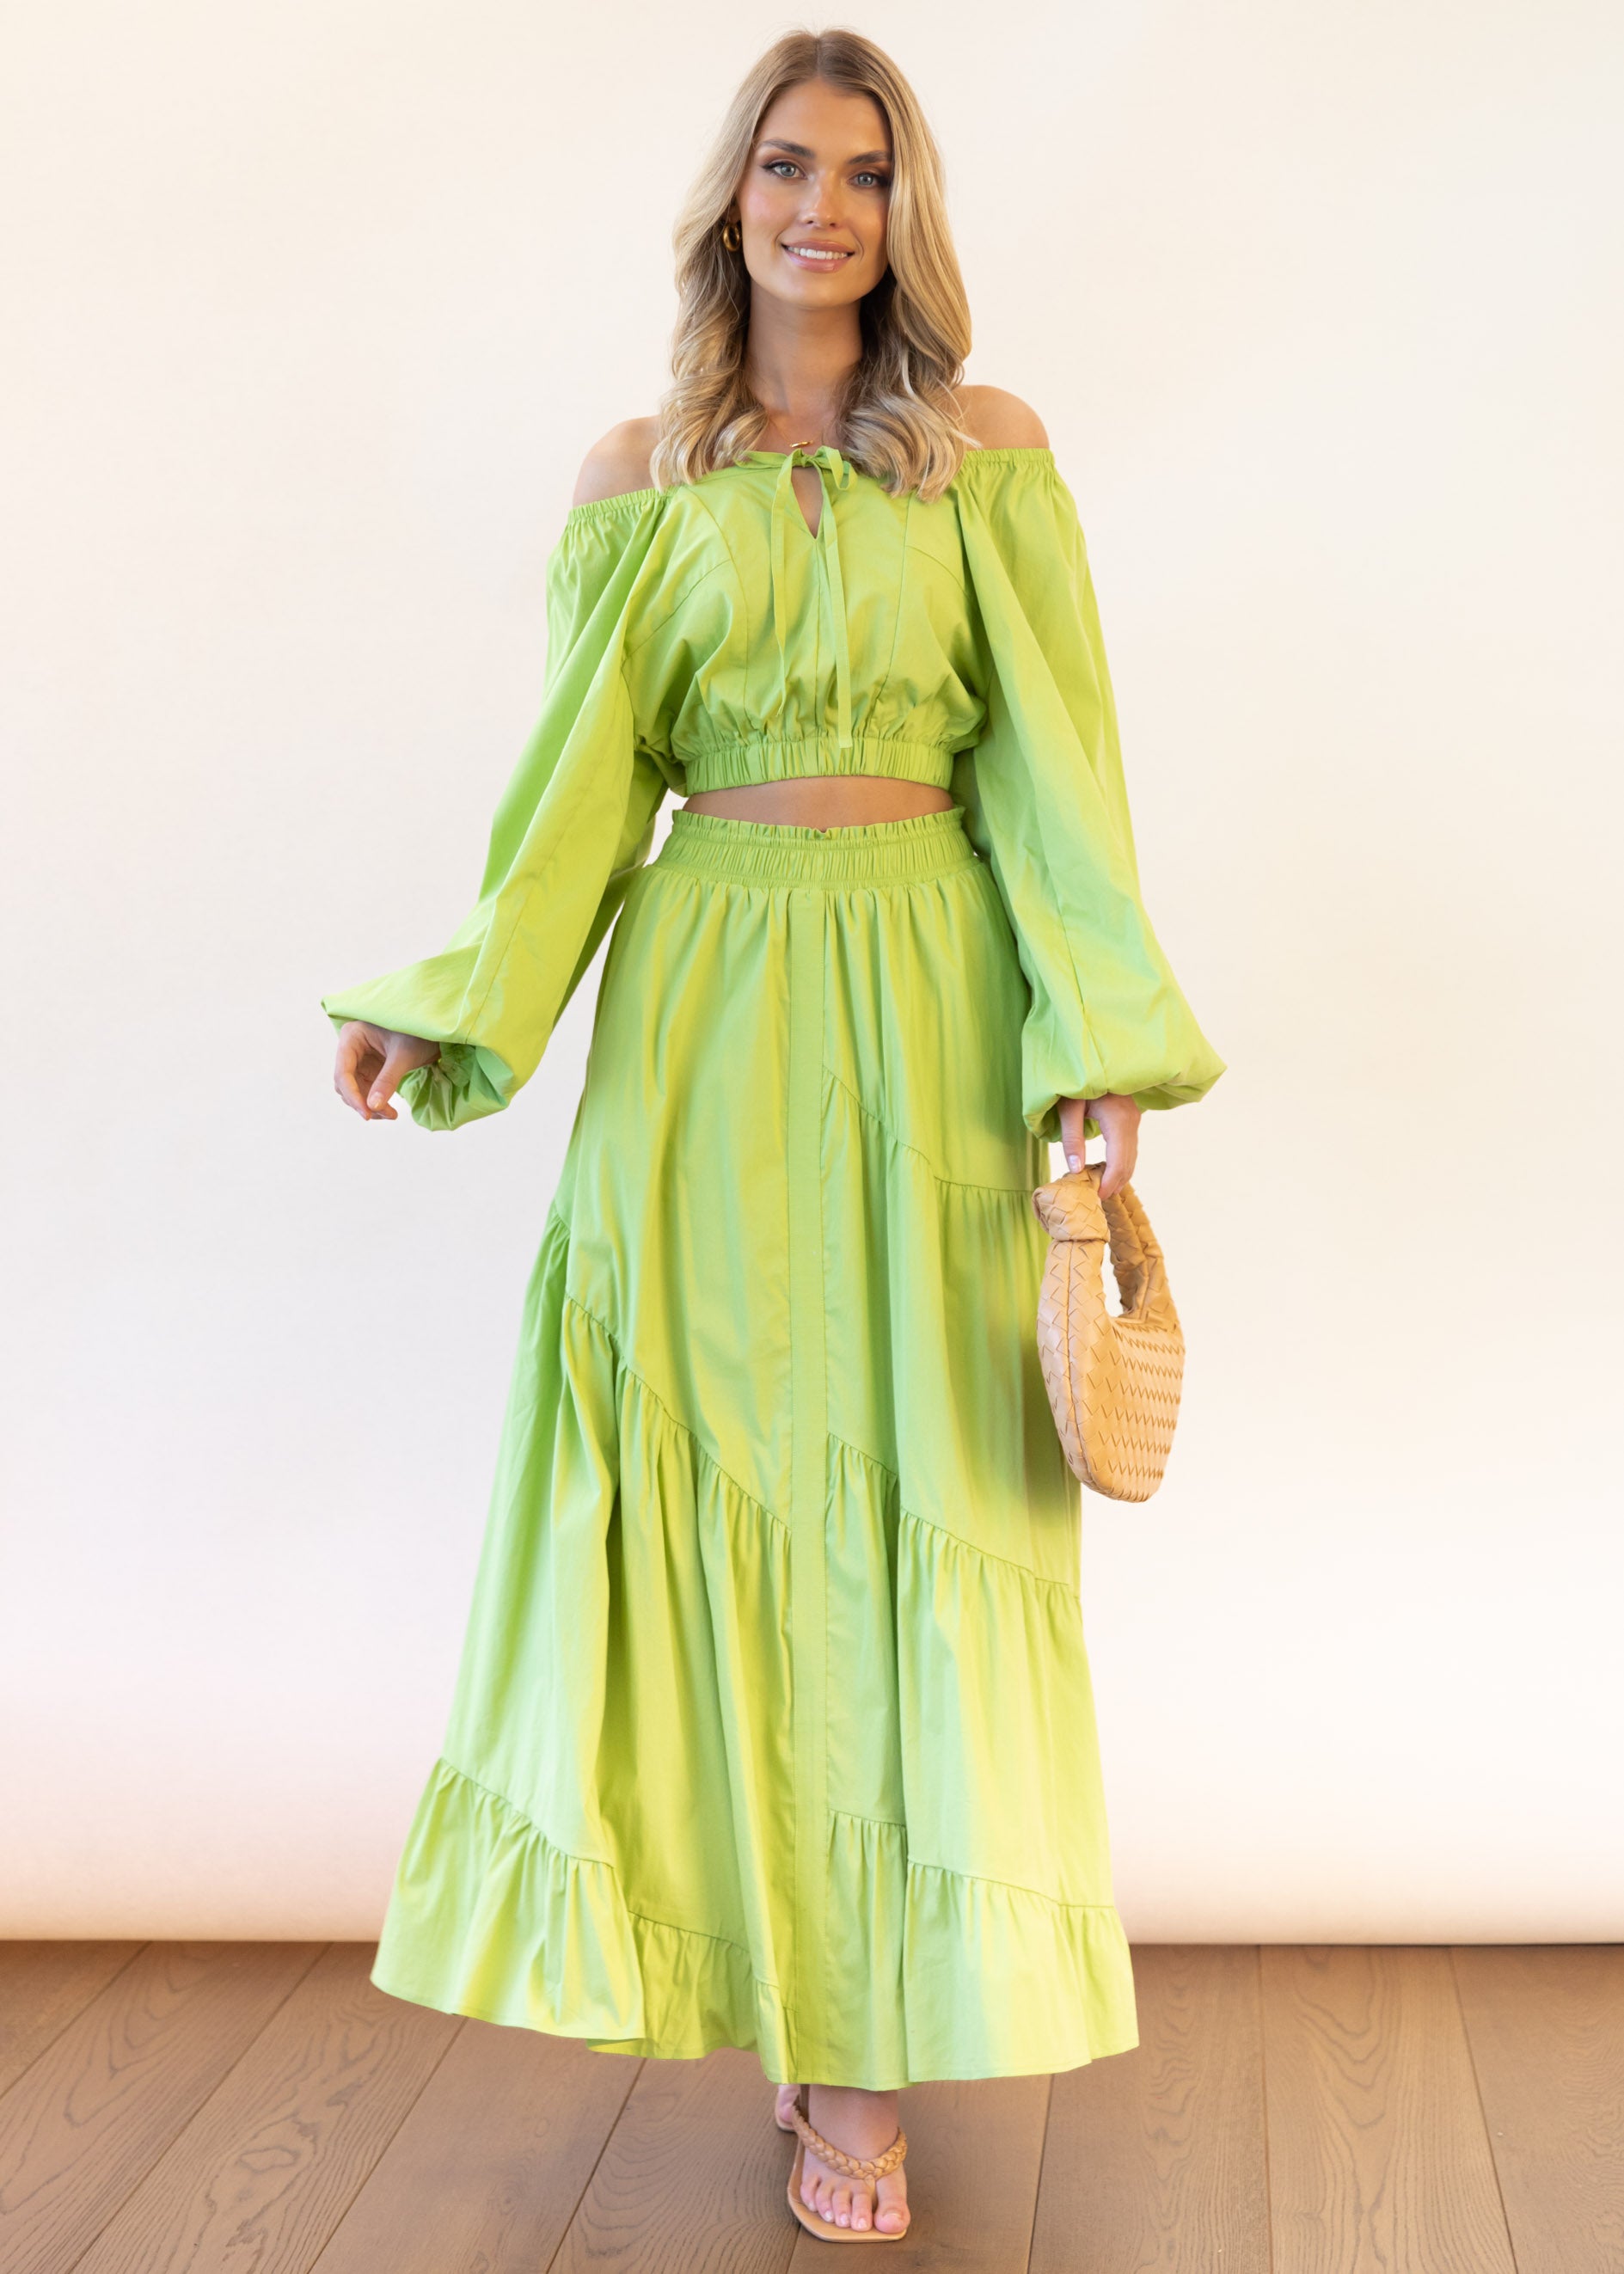 Gillia Cropped Blouse - Lime